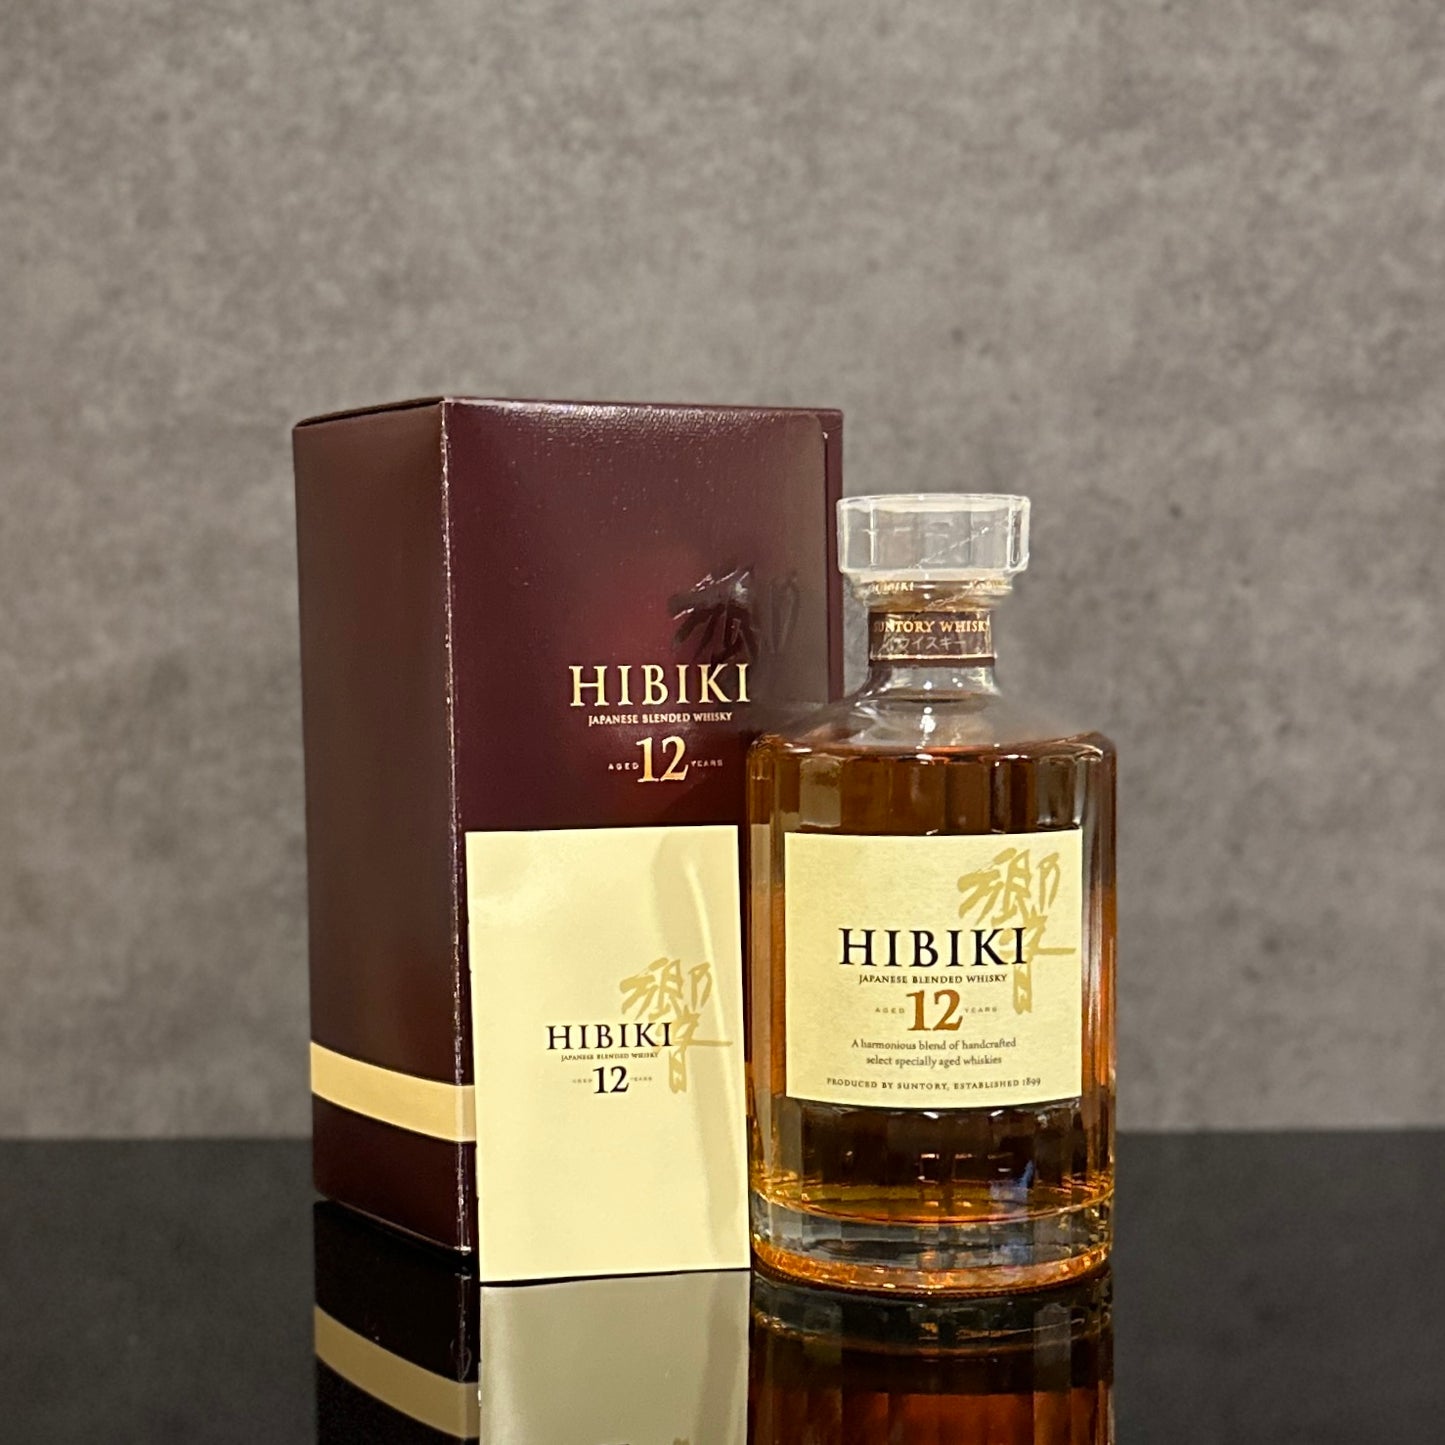 Hibiki 12 Year Old Blended Japanese Whisky (Old Version)